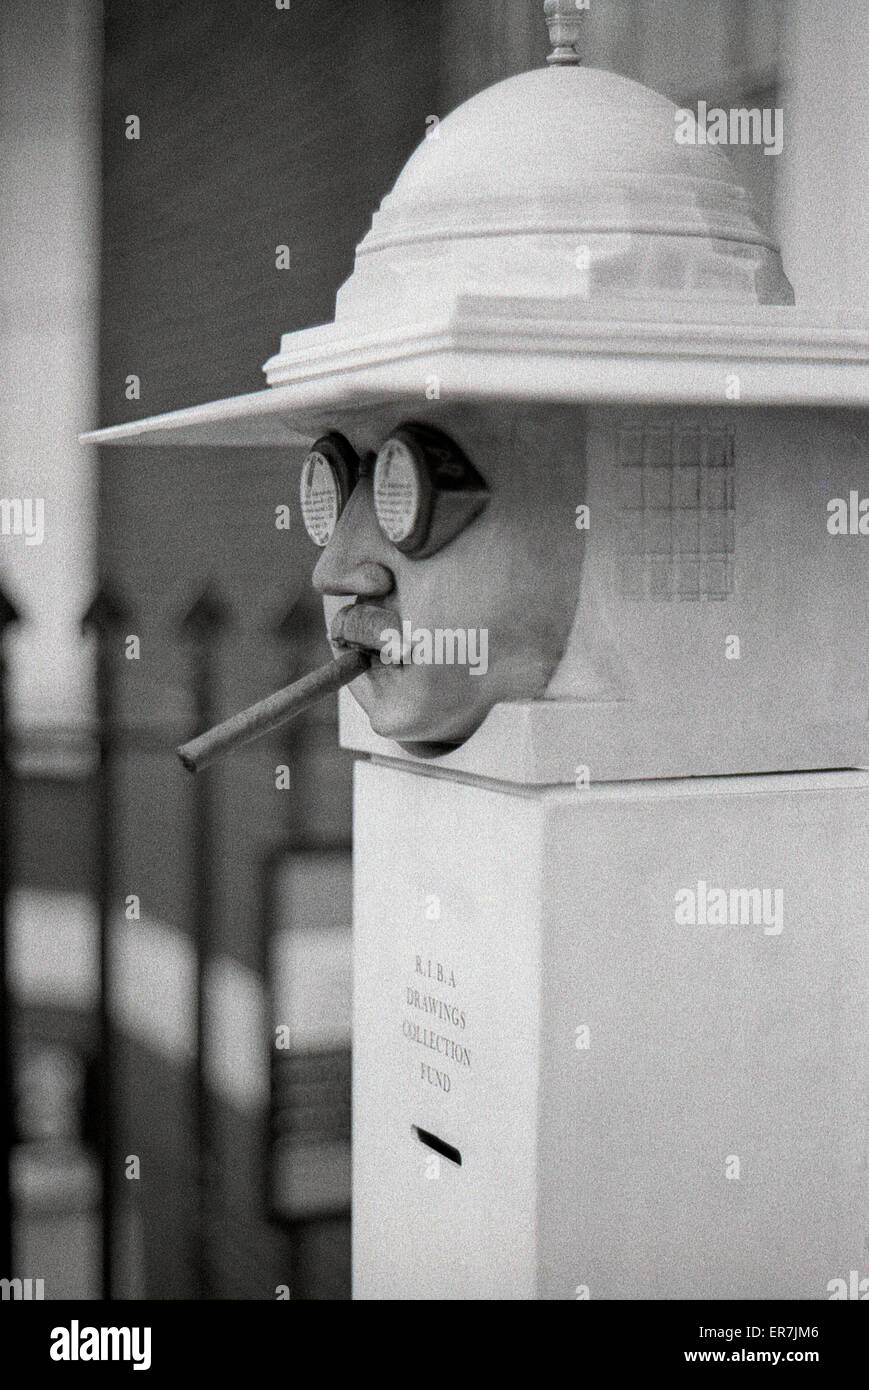 Lutyens architect bust outside architect Cedric Price exhibition 'The Evolving Image' at the RIBA Heinz Gallery Portman Square London England UK  1975   KATHY DEWITT Stock Photo